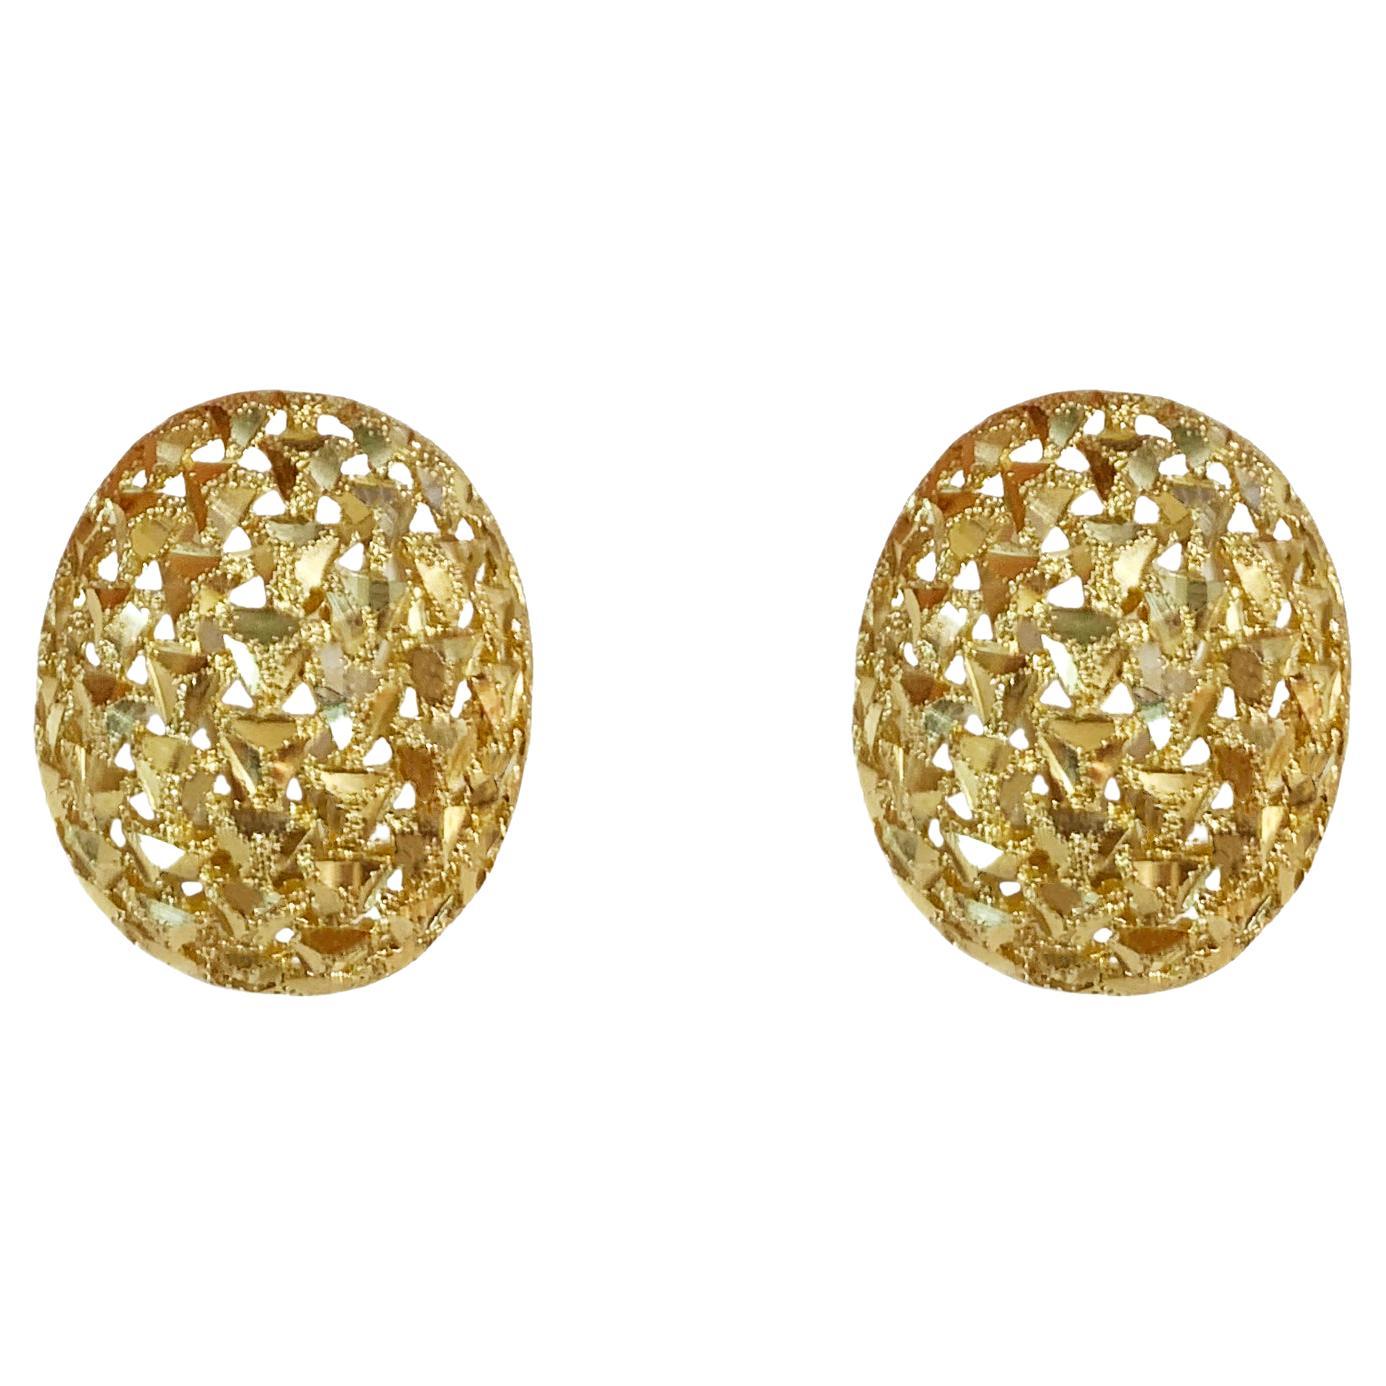 Oval 14K Yellow Gold Earrings For Sale